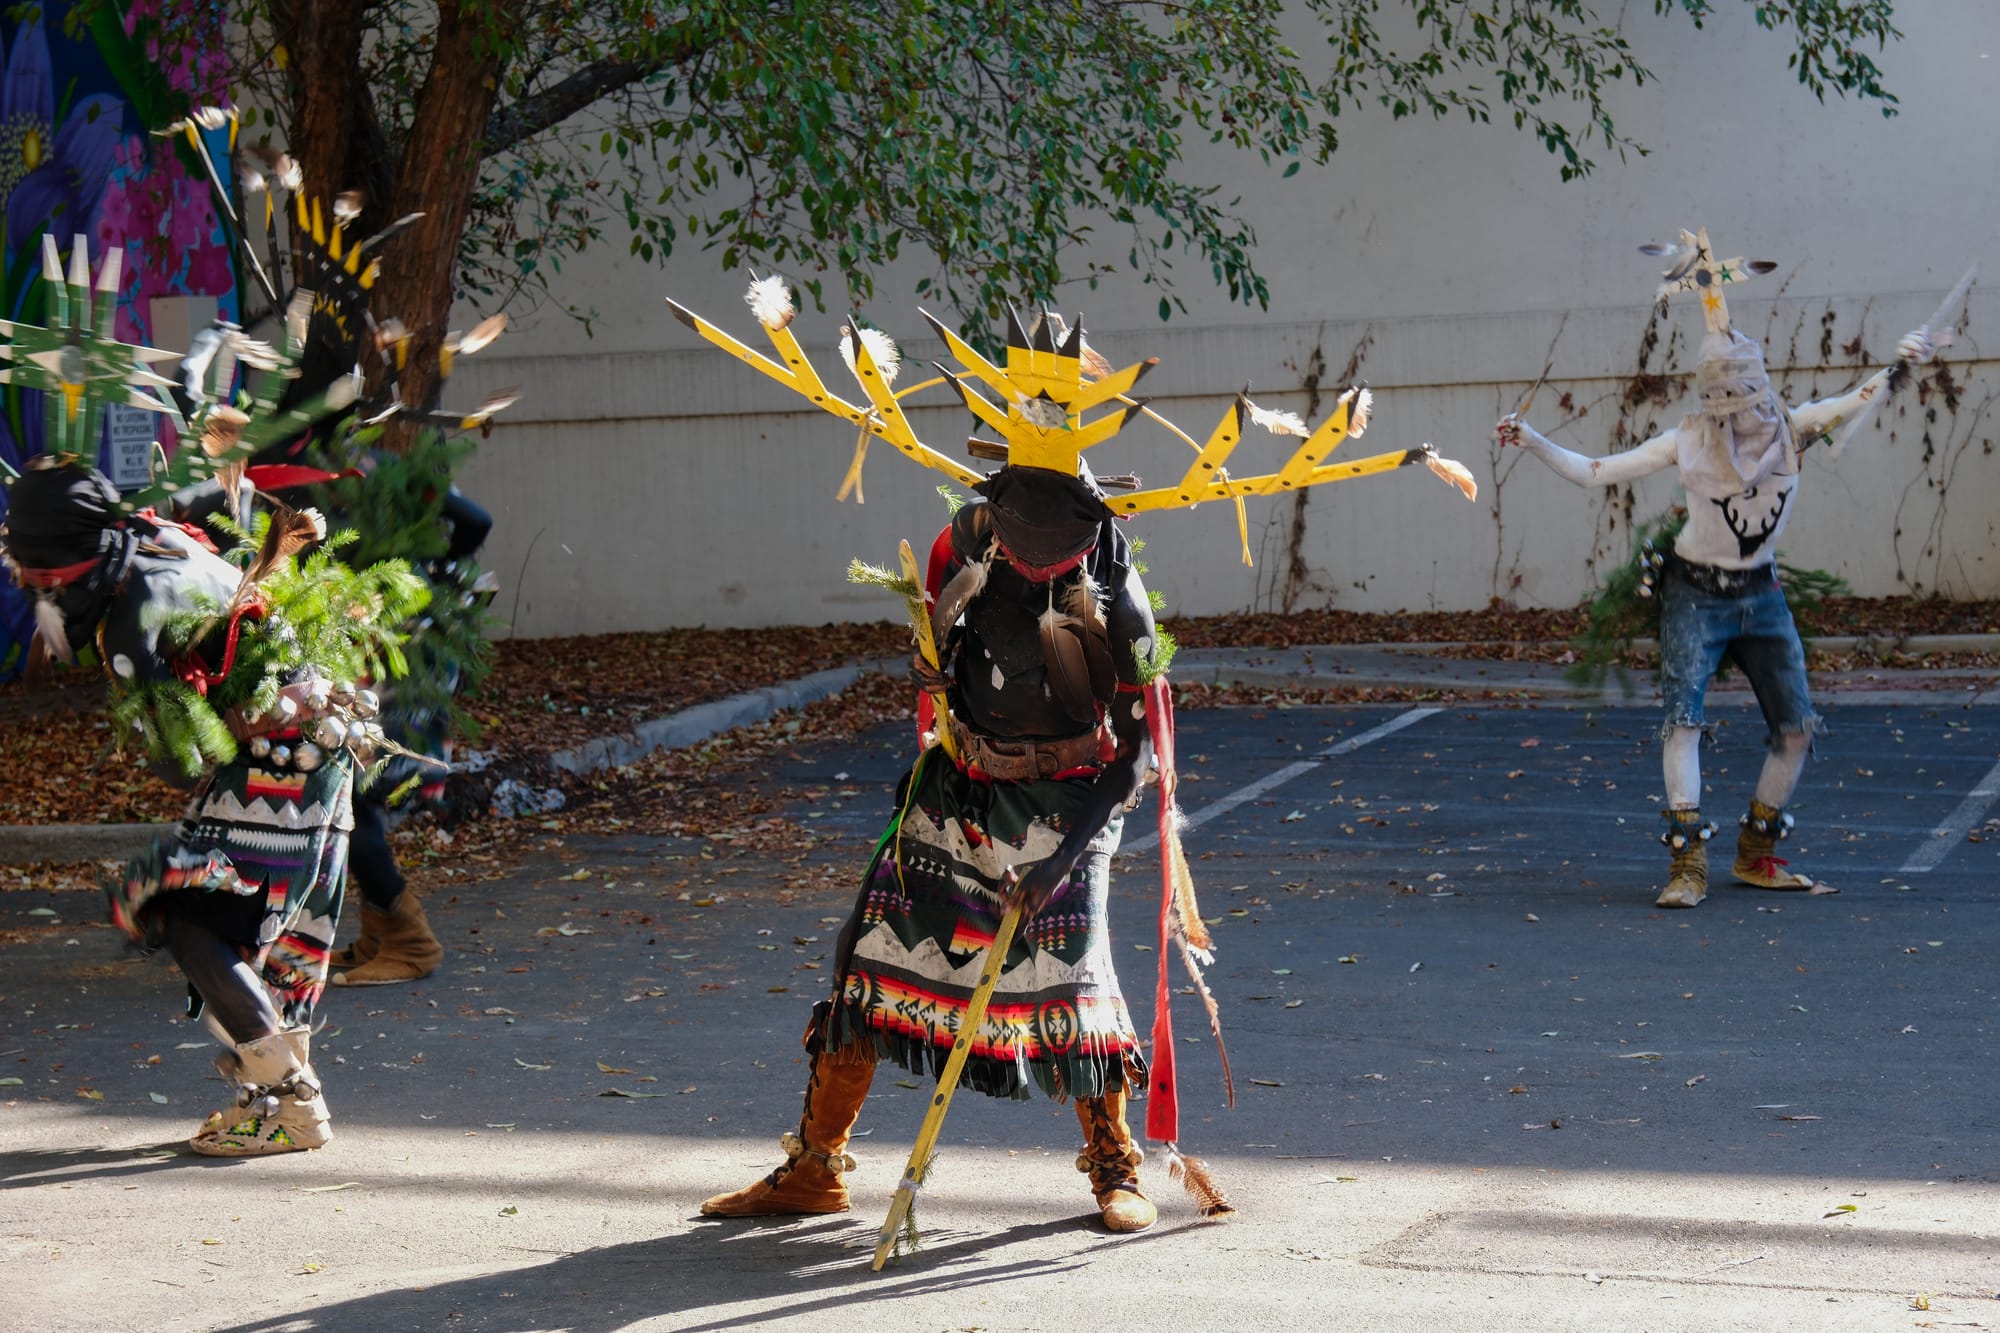 Dishchii' Bikoh Apache Crowndancers dressed in traditional attire dance together